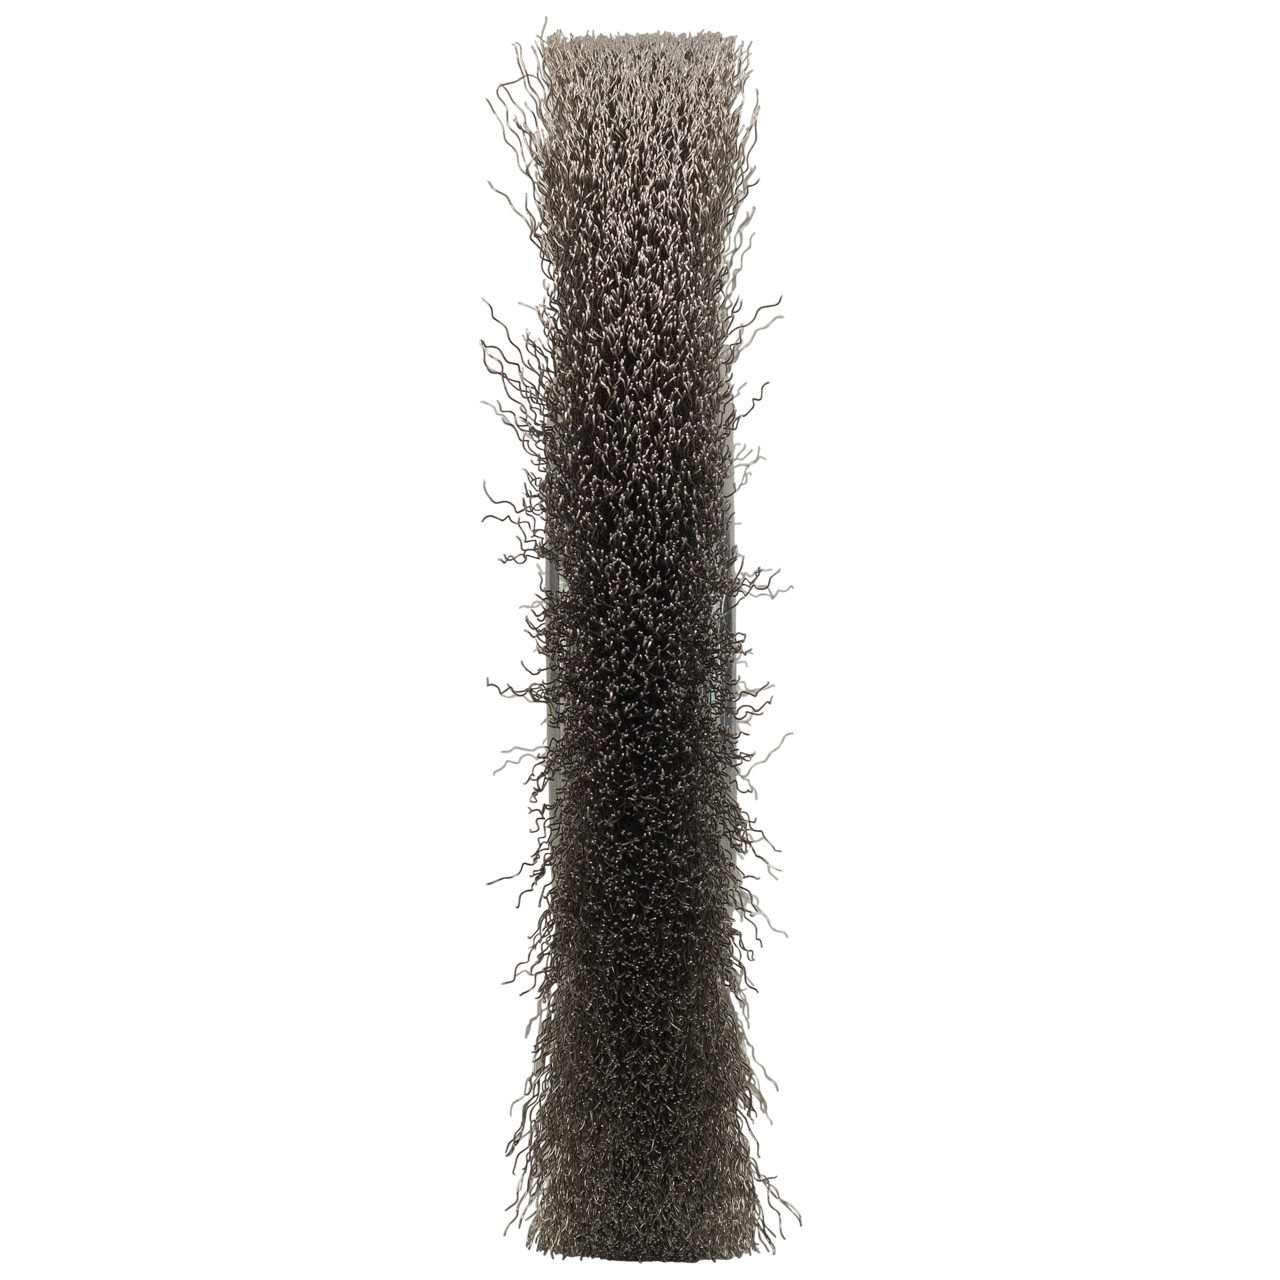 Tyrolit Round brushes DxWxLxH 125x24x36x20 For stainless steel, shape: 1RDW - (round brushes), Art. 896113